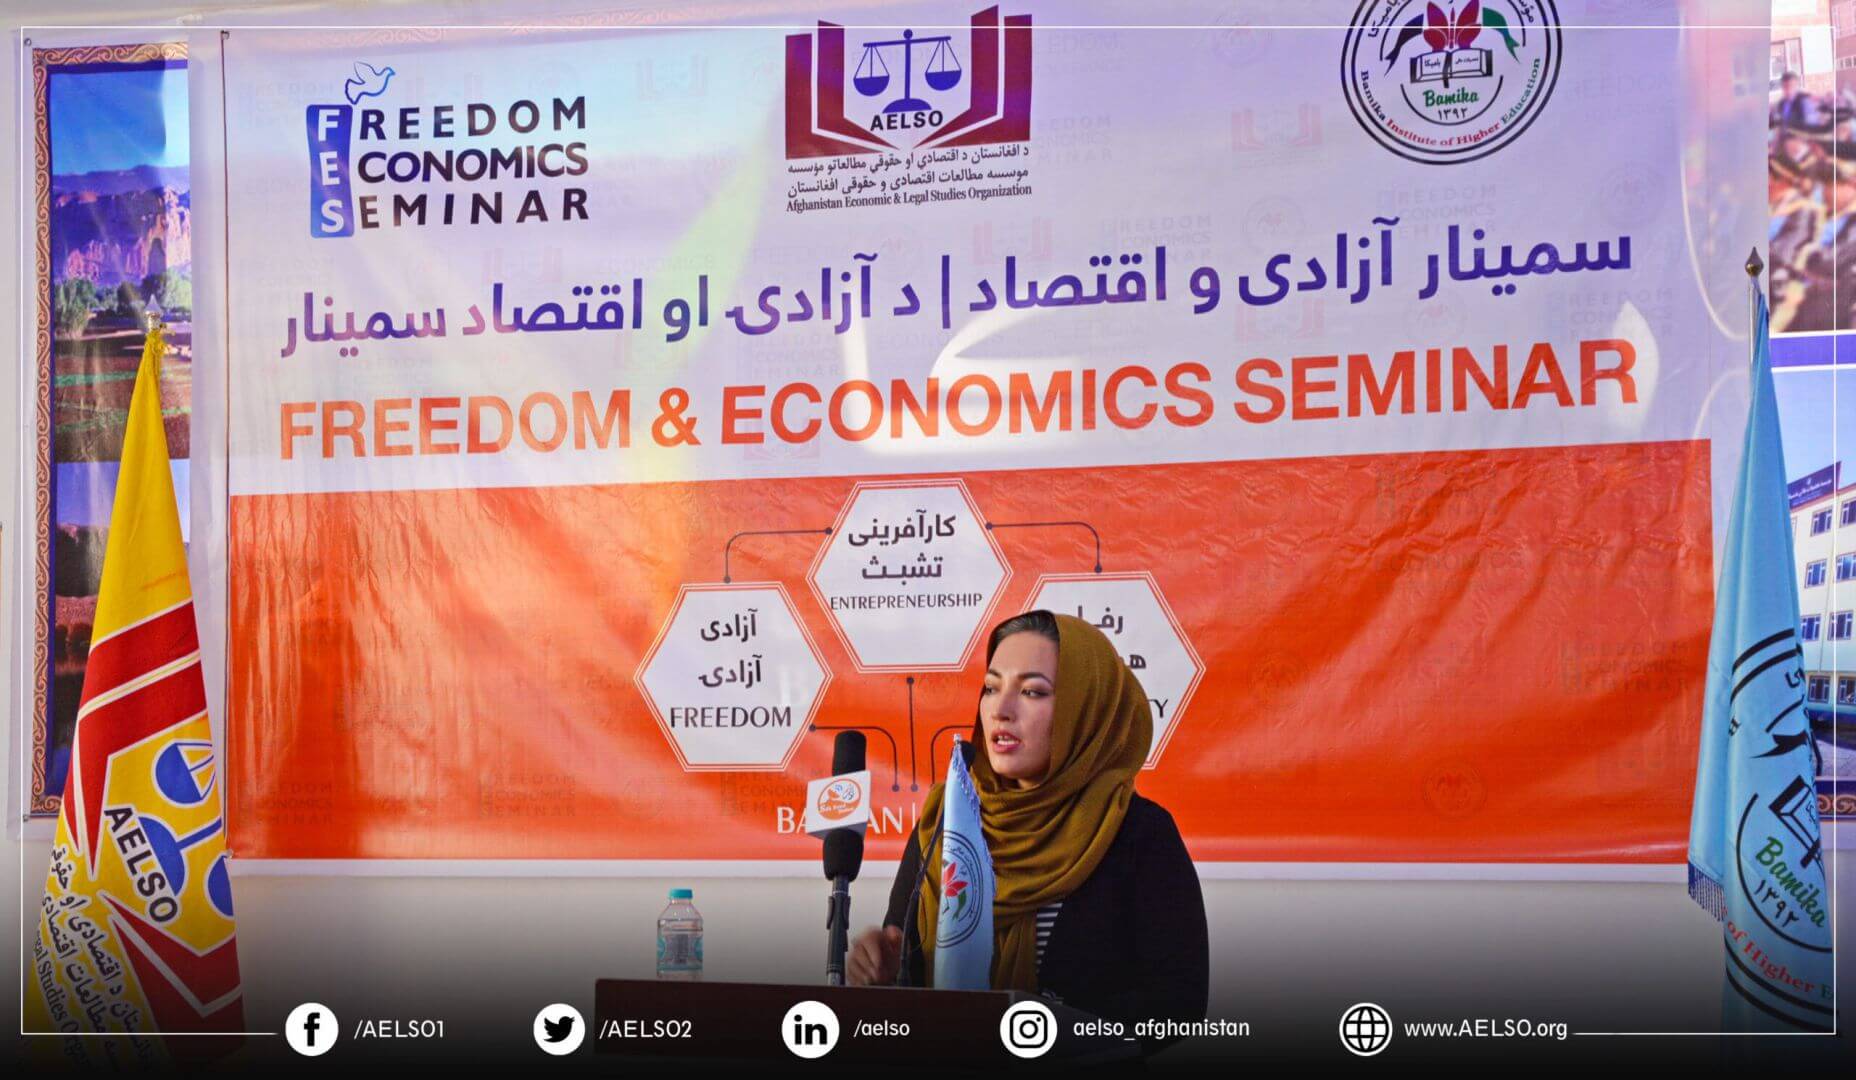 Shahr Bano Javadi; another participant of Freedom & Economics Seminar